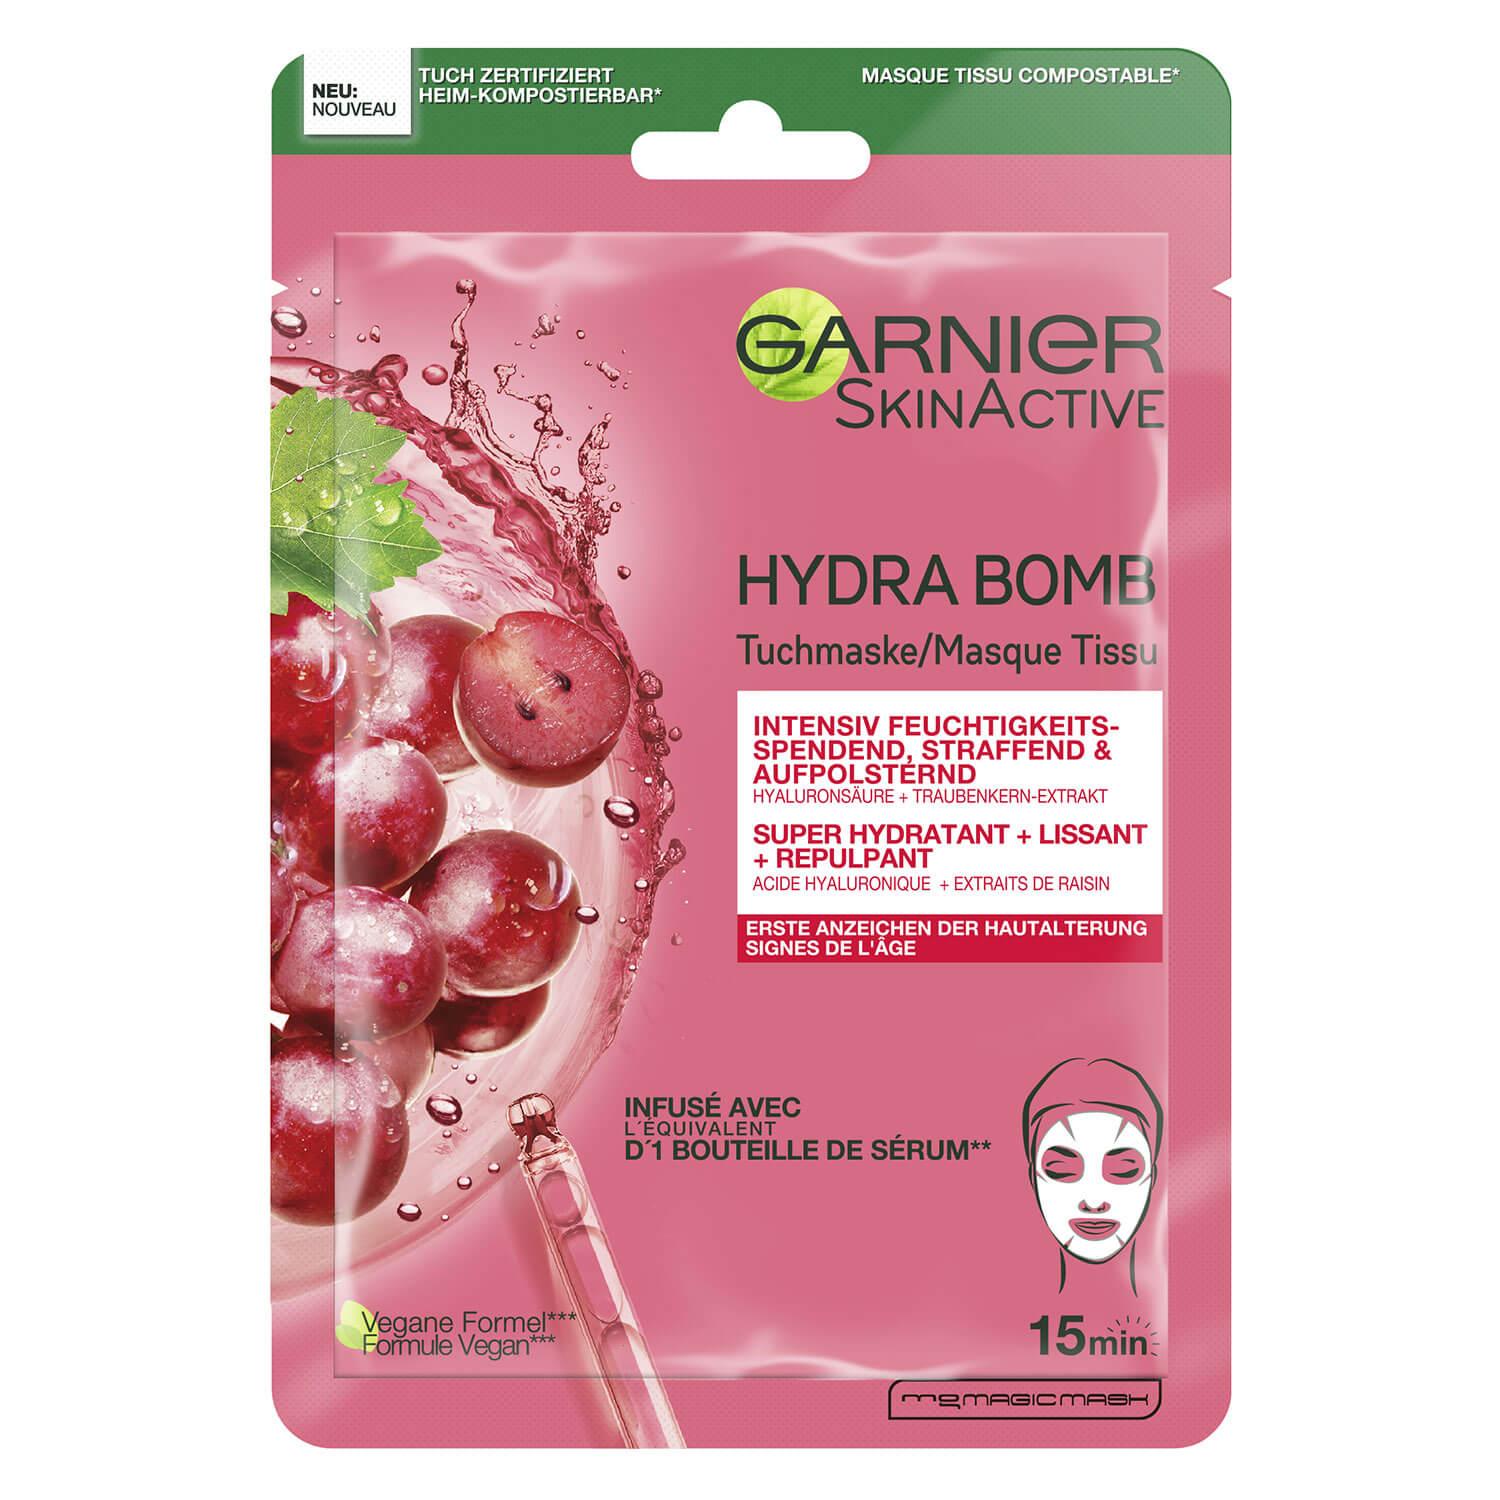 Skinactive Face - Hydra Bomb Masque Tissu Super Hydratant + Lissant + Repulpant